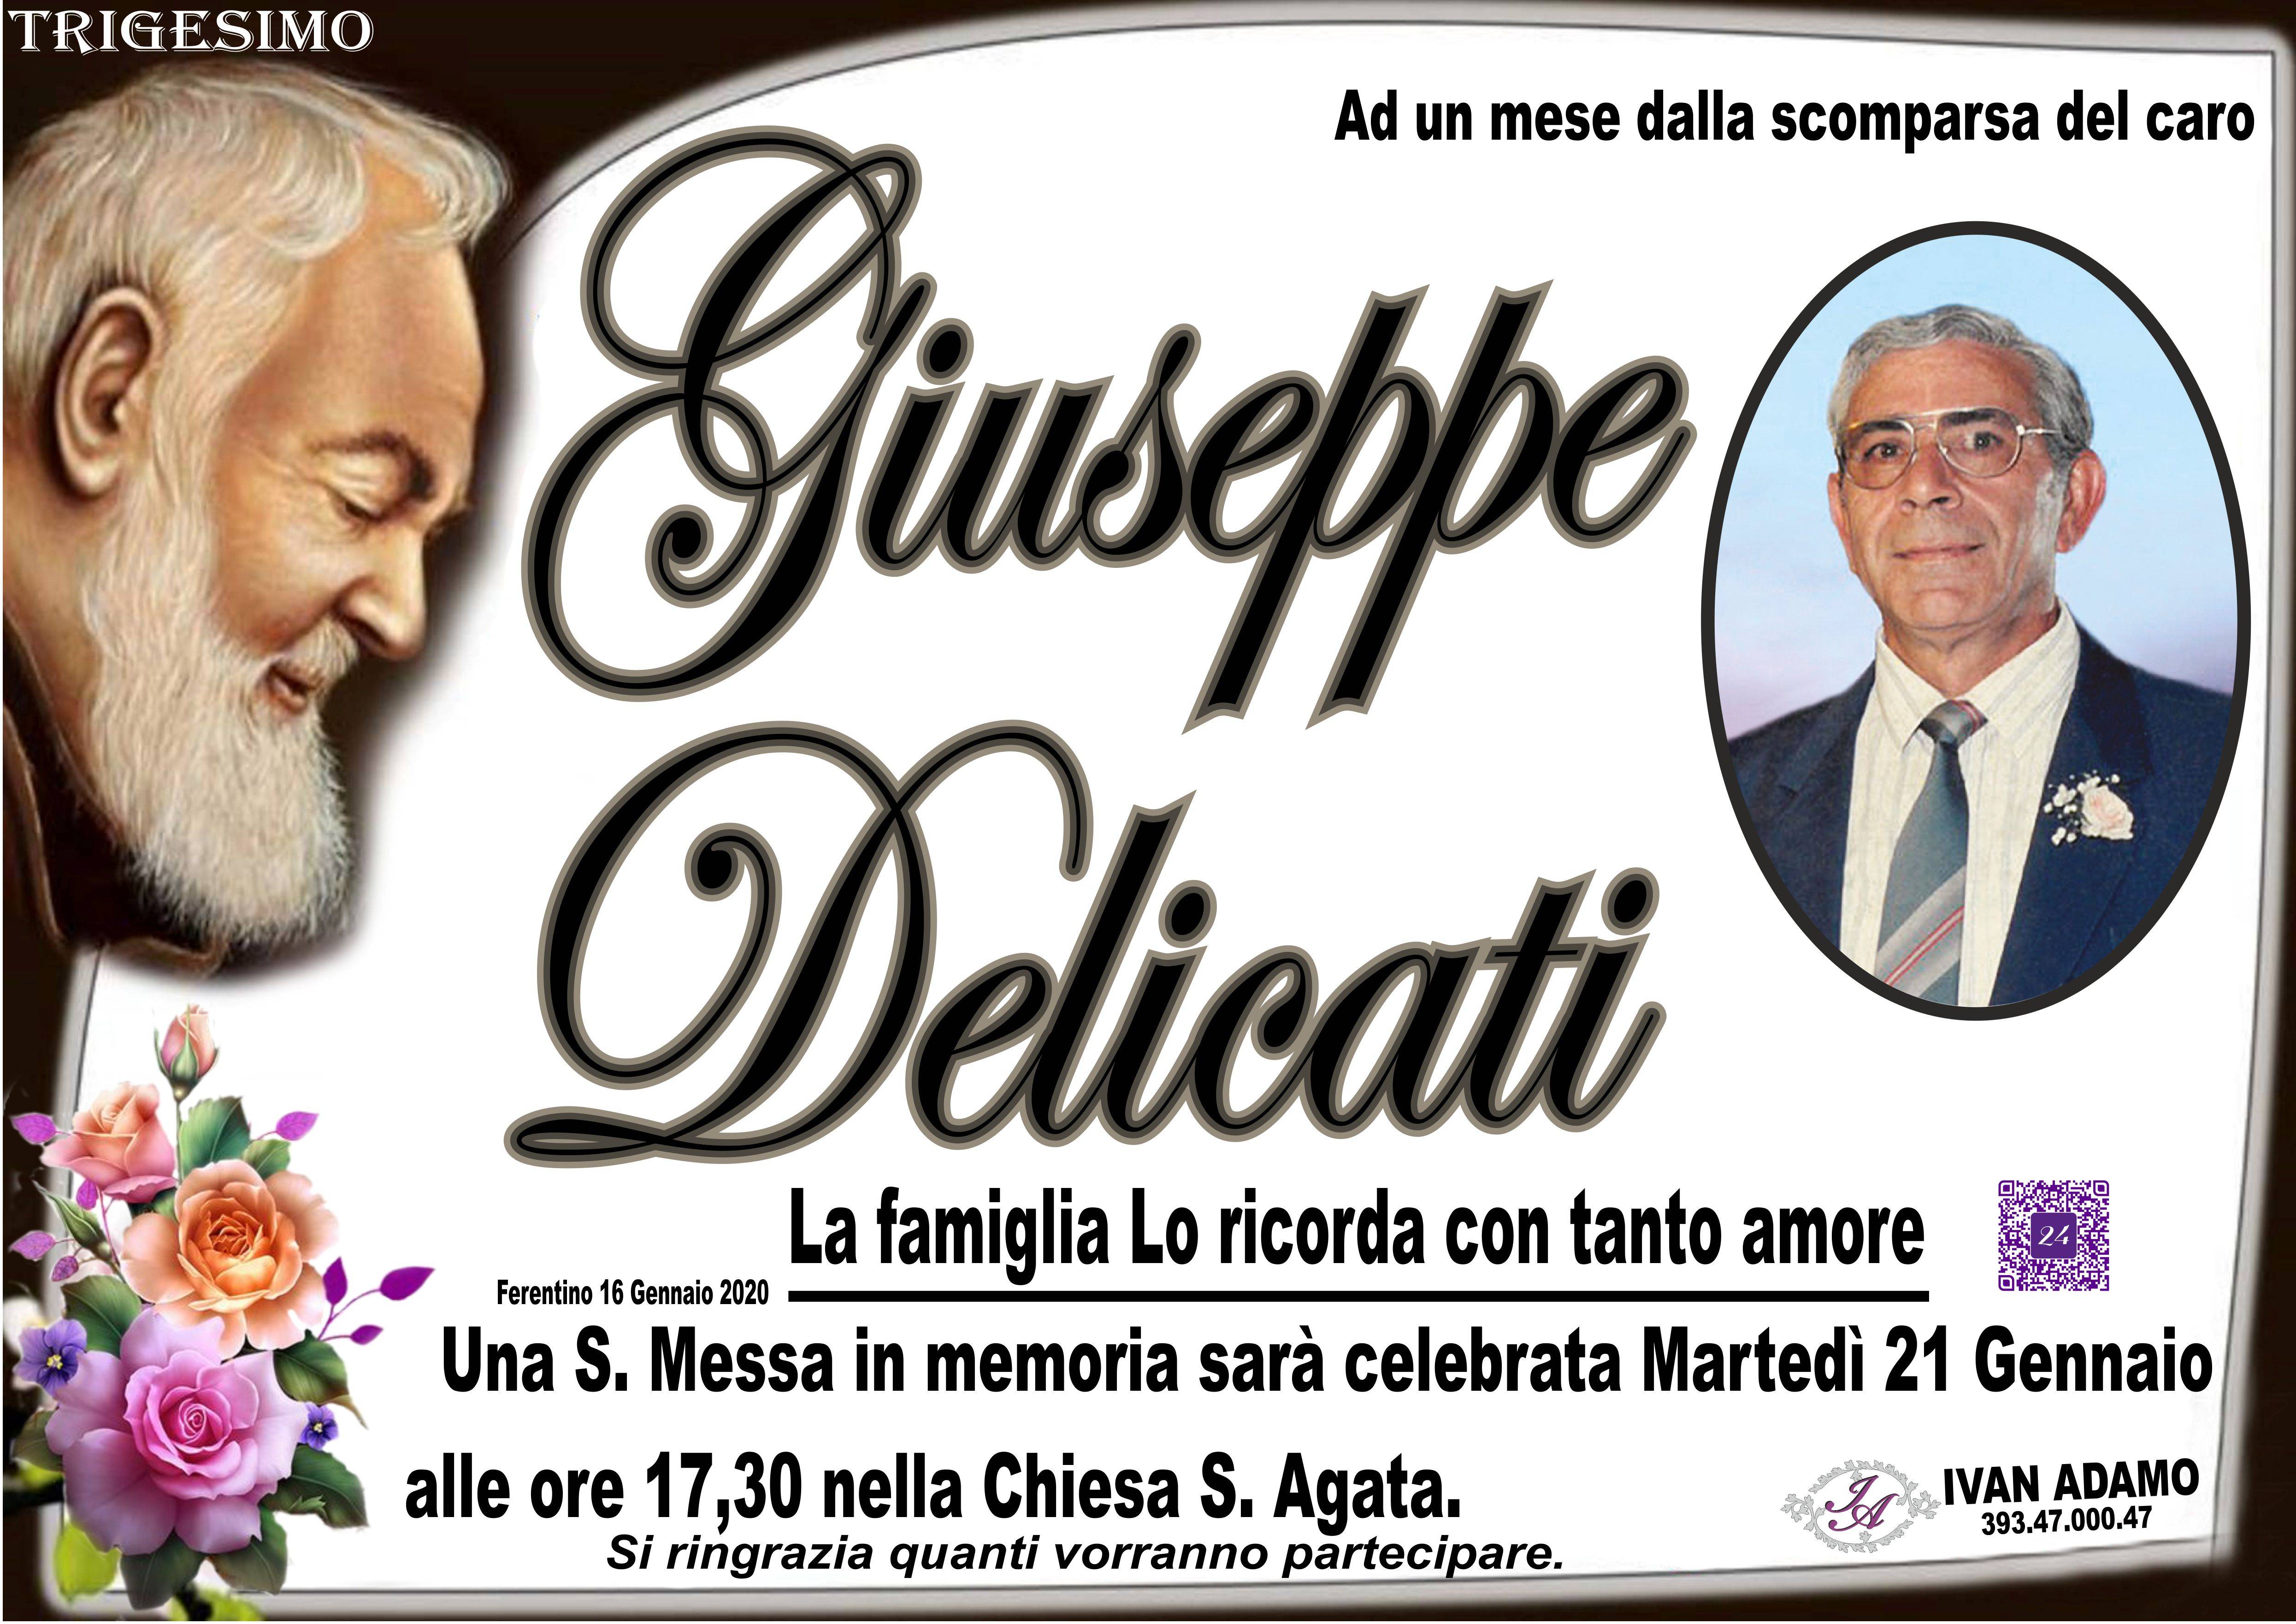 Giuseppe Delicati